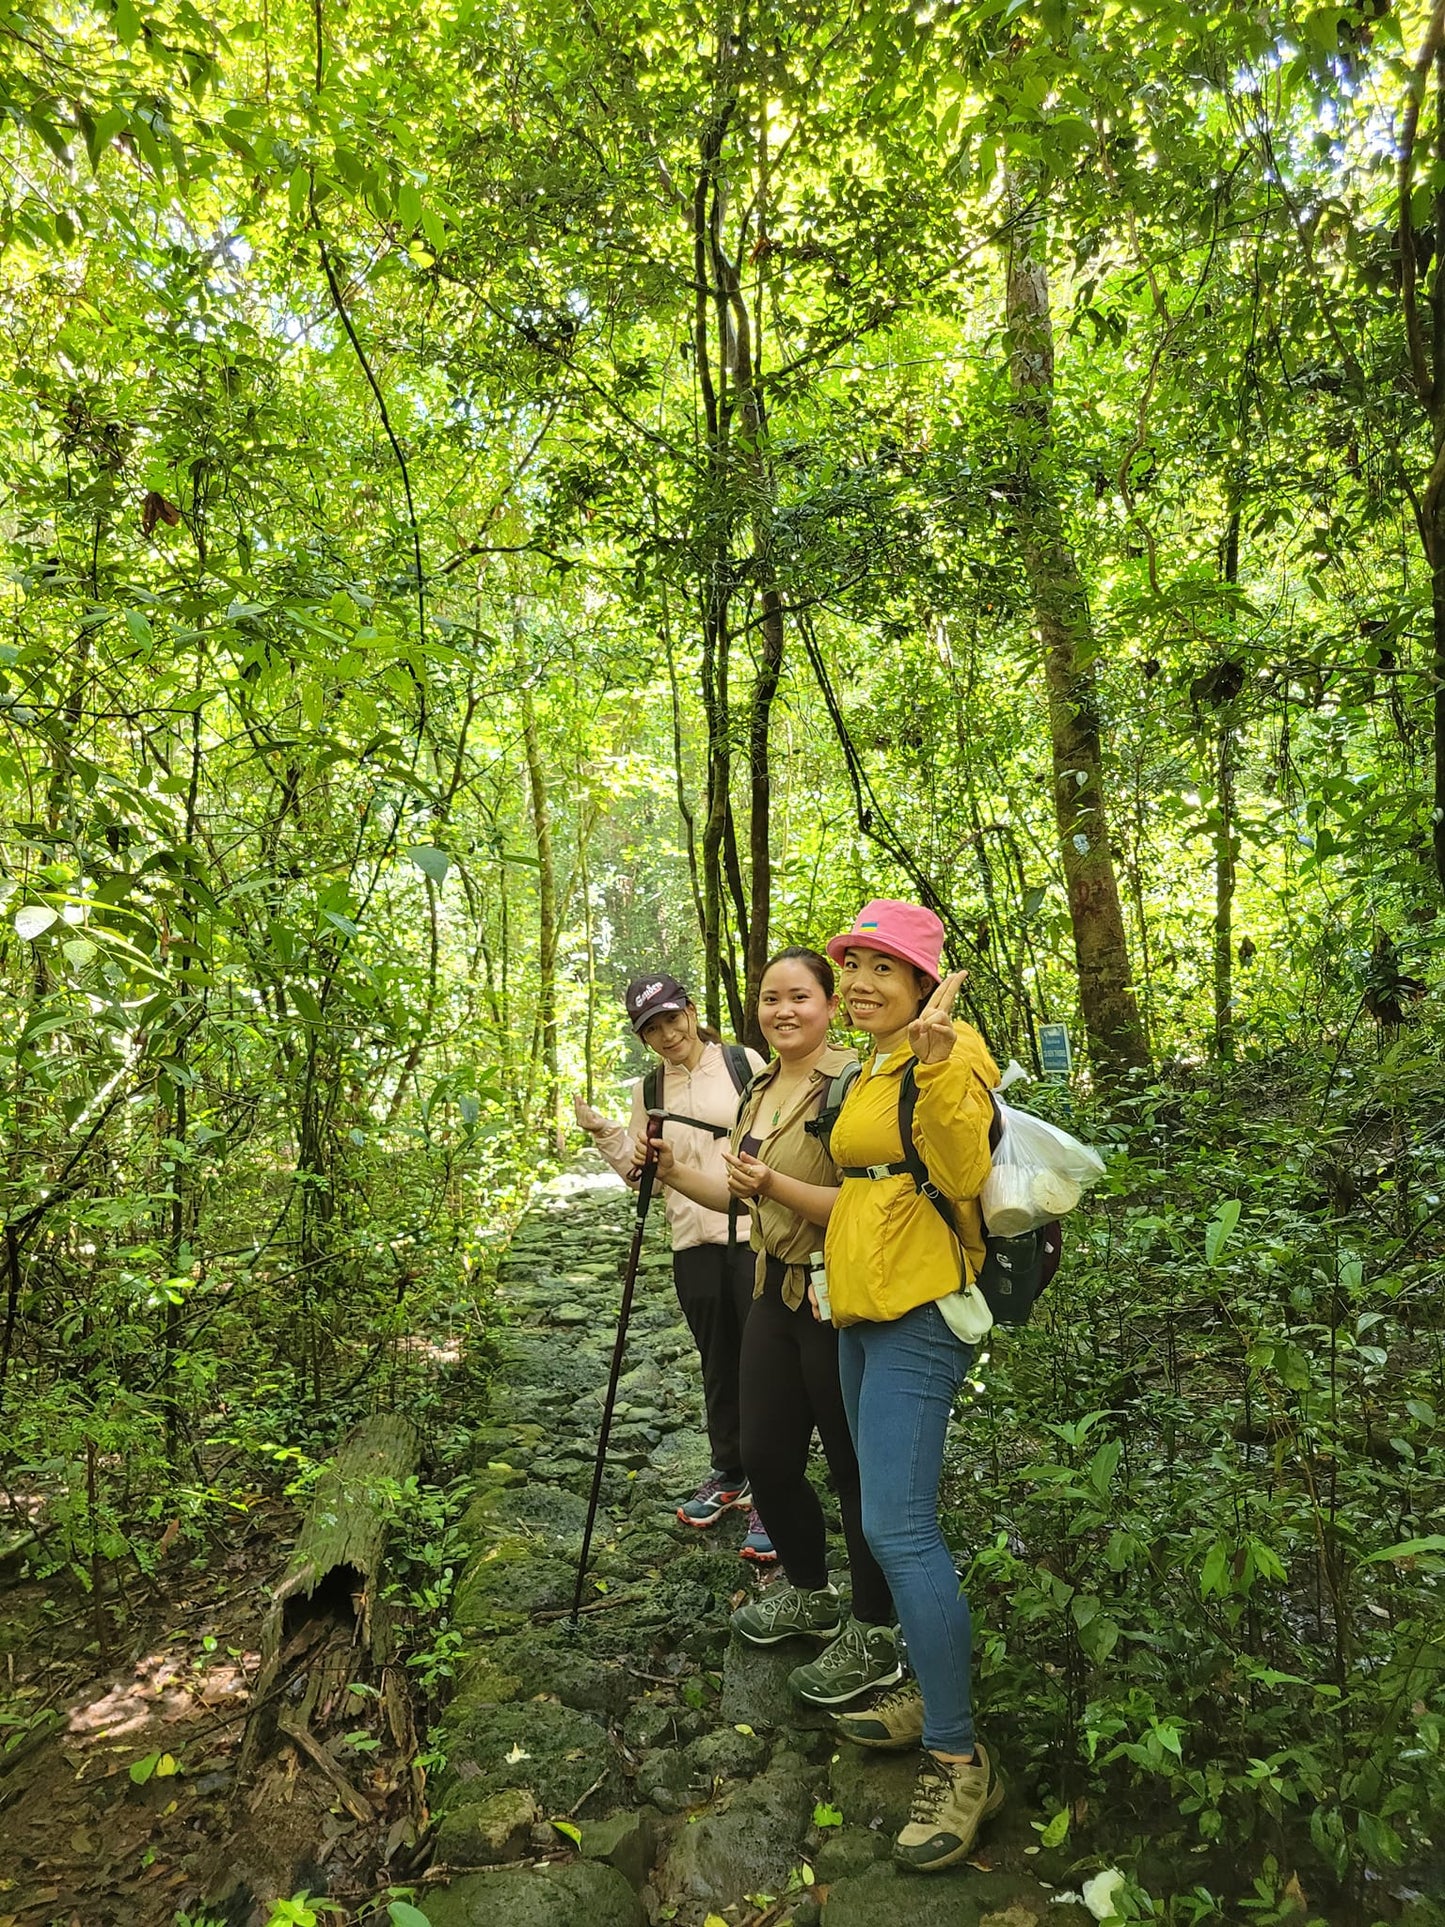 6A2: Nam Cat Tien National Park: Where Nature's Wonders Come Alive!